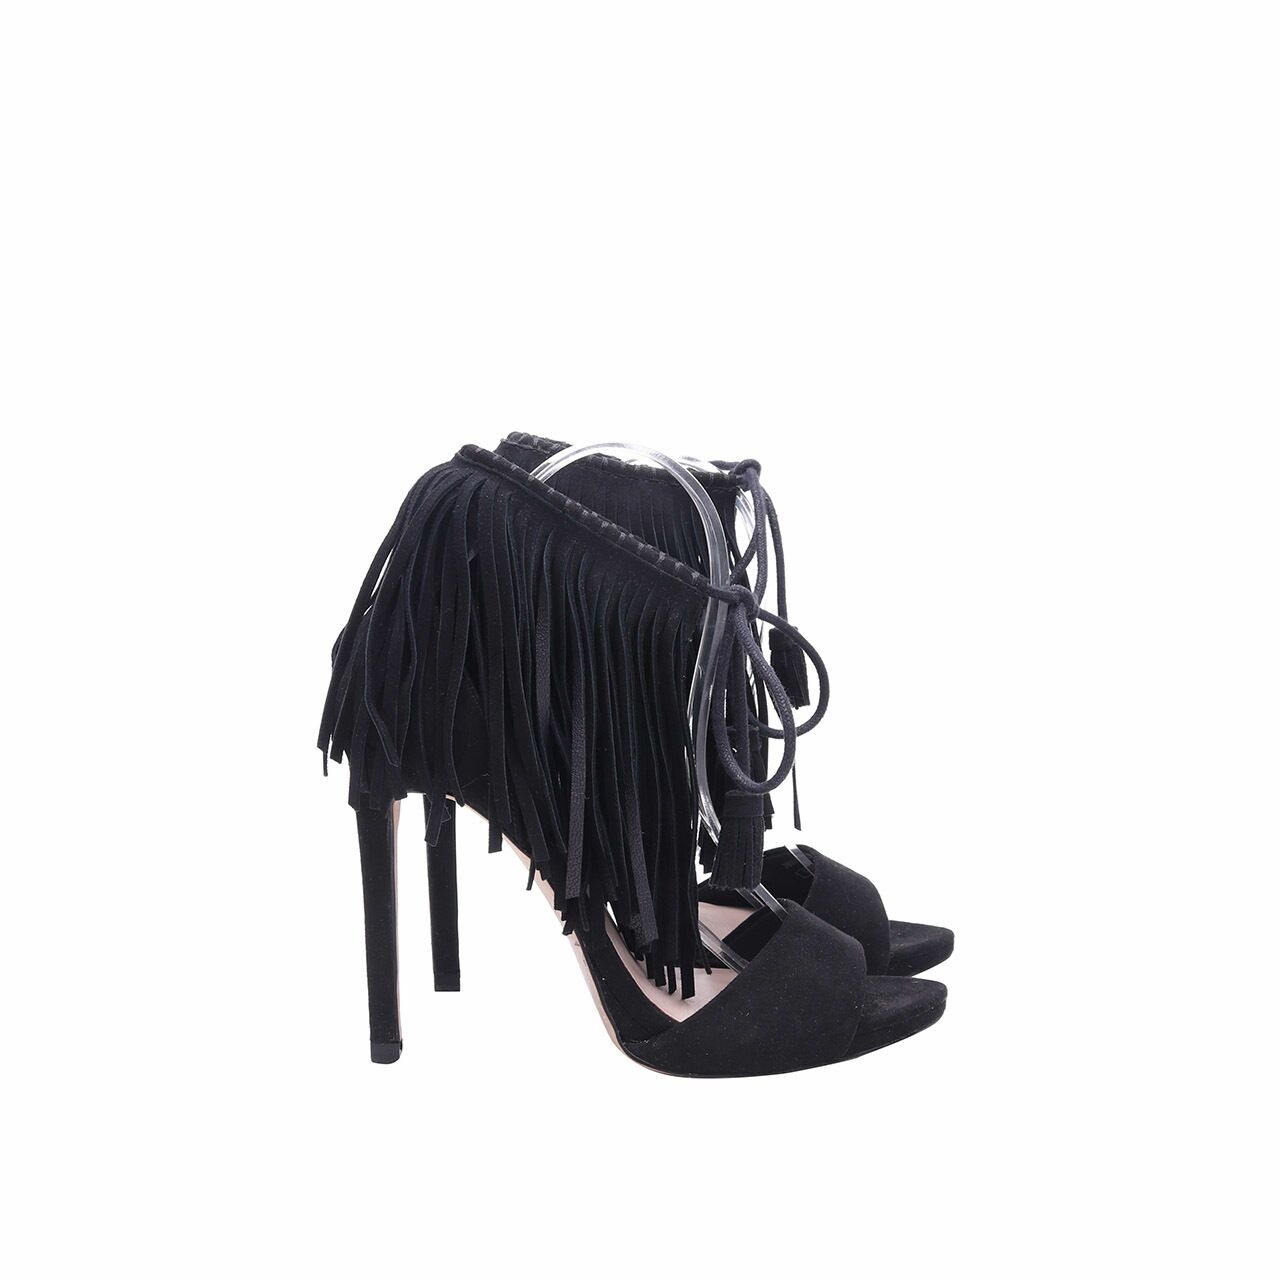 Zara Black Suede Fringe Ankle Heels